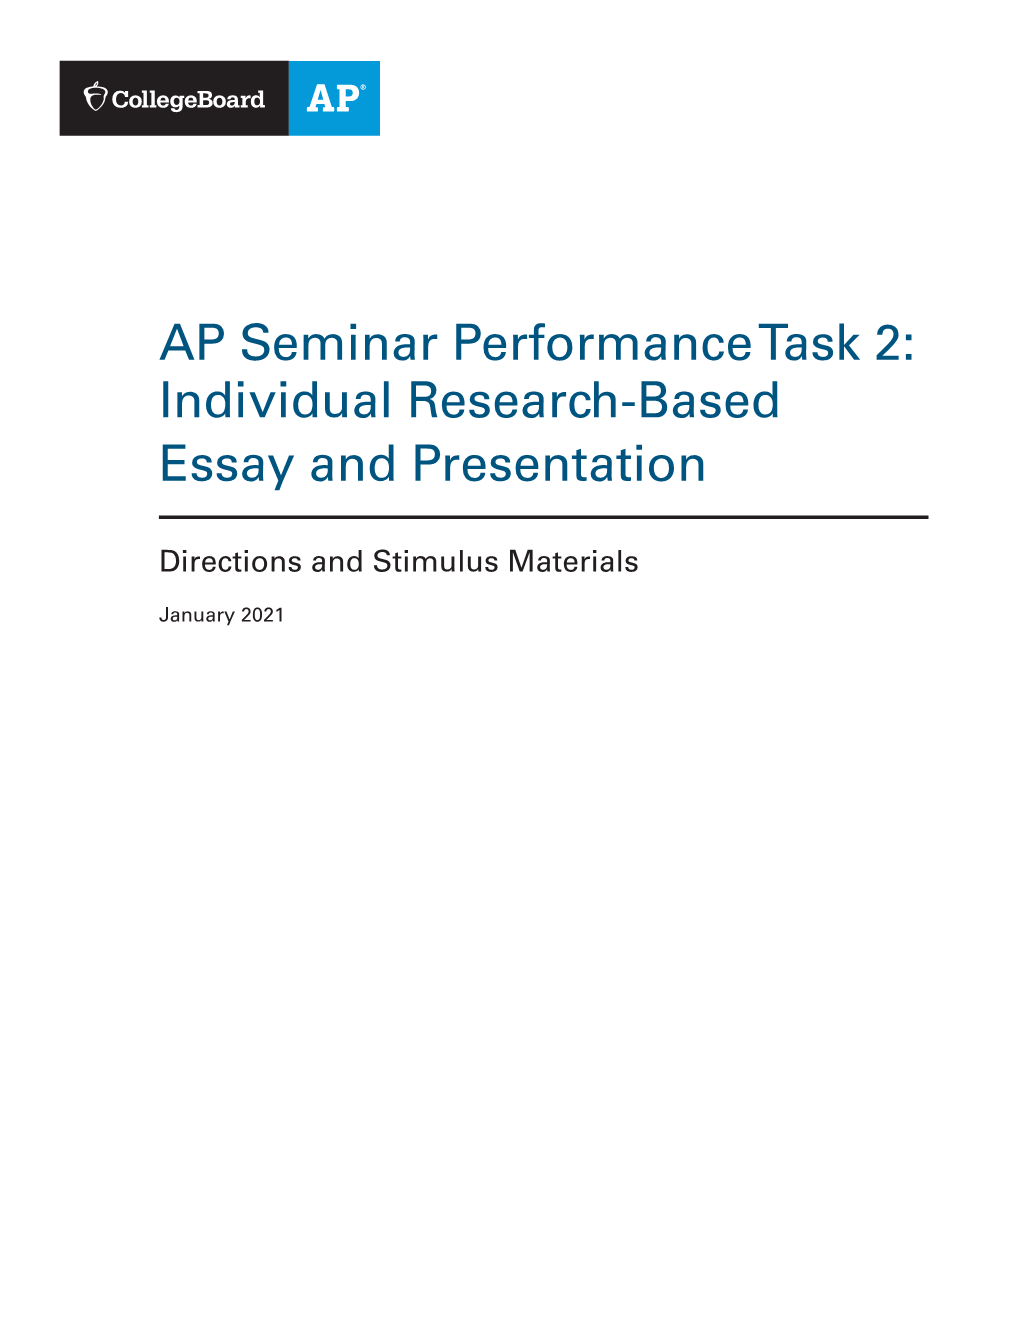 AP Seminar Performance Task 2: Individual Research-Based Essay and Presentation